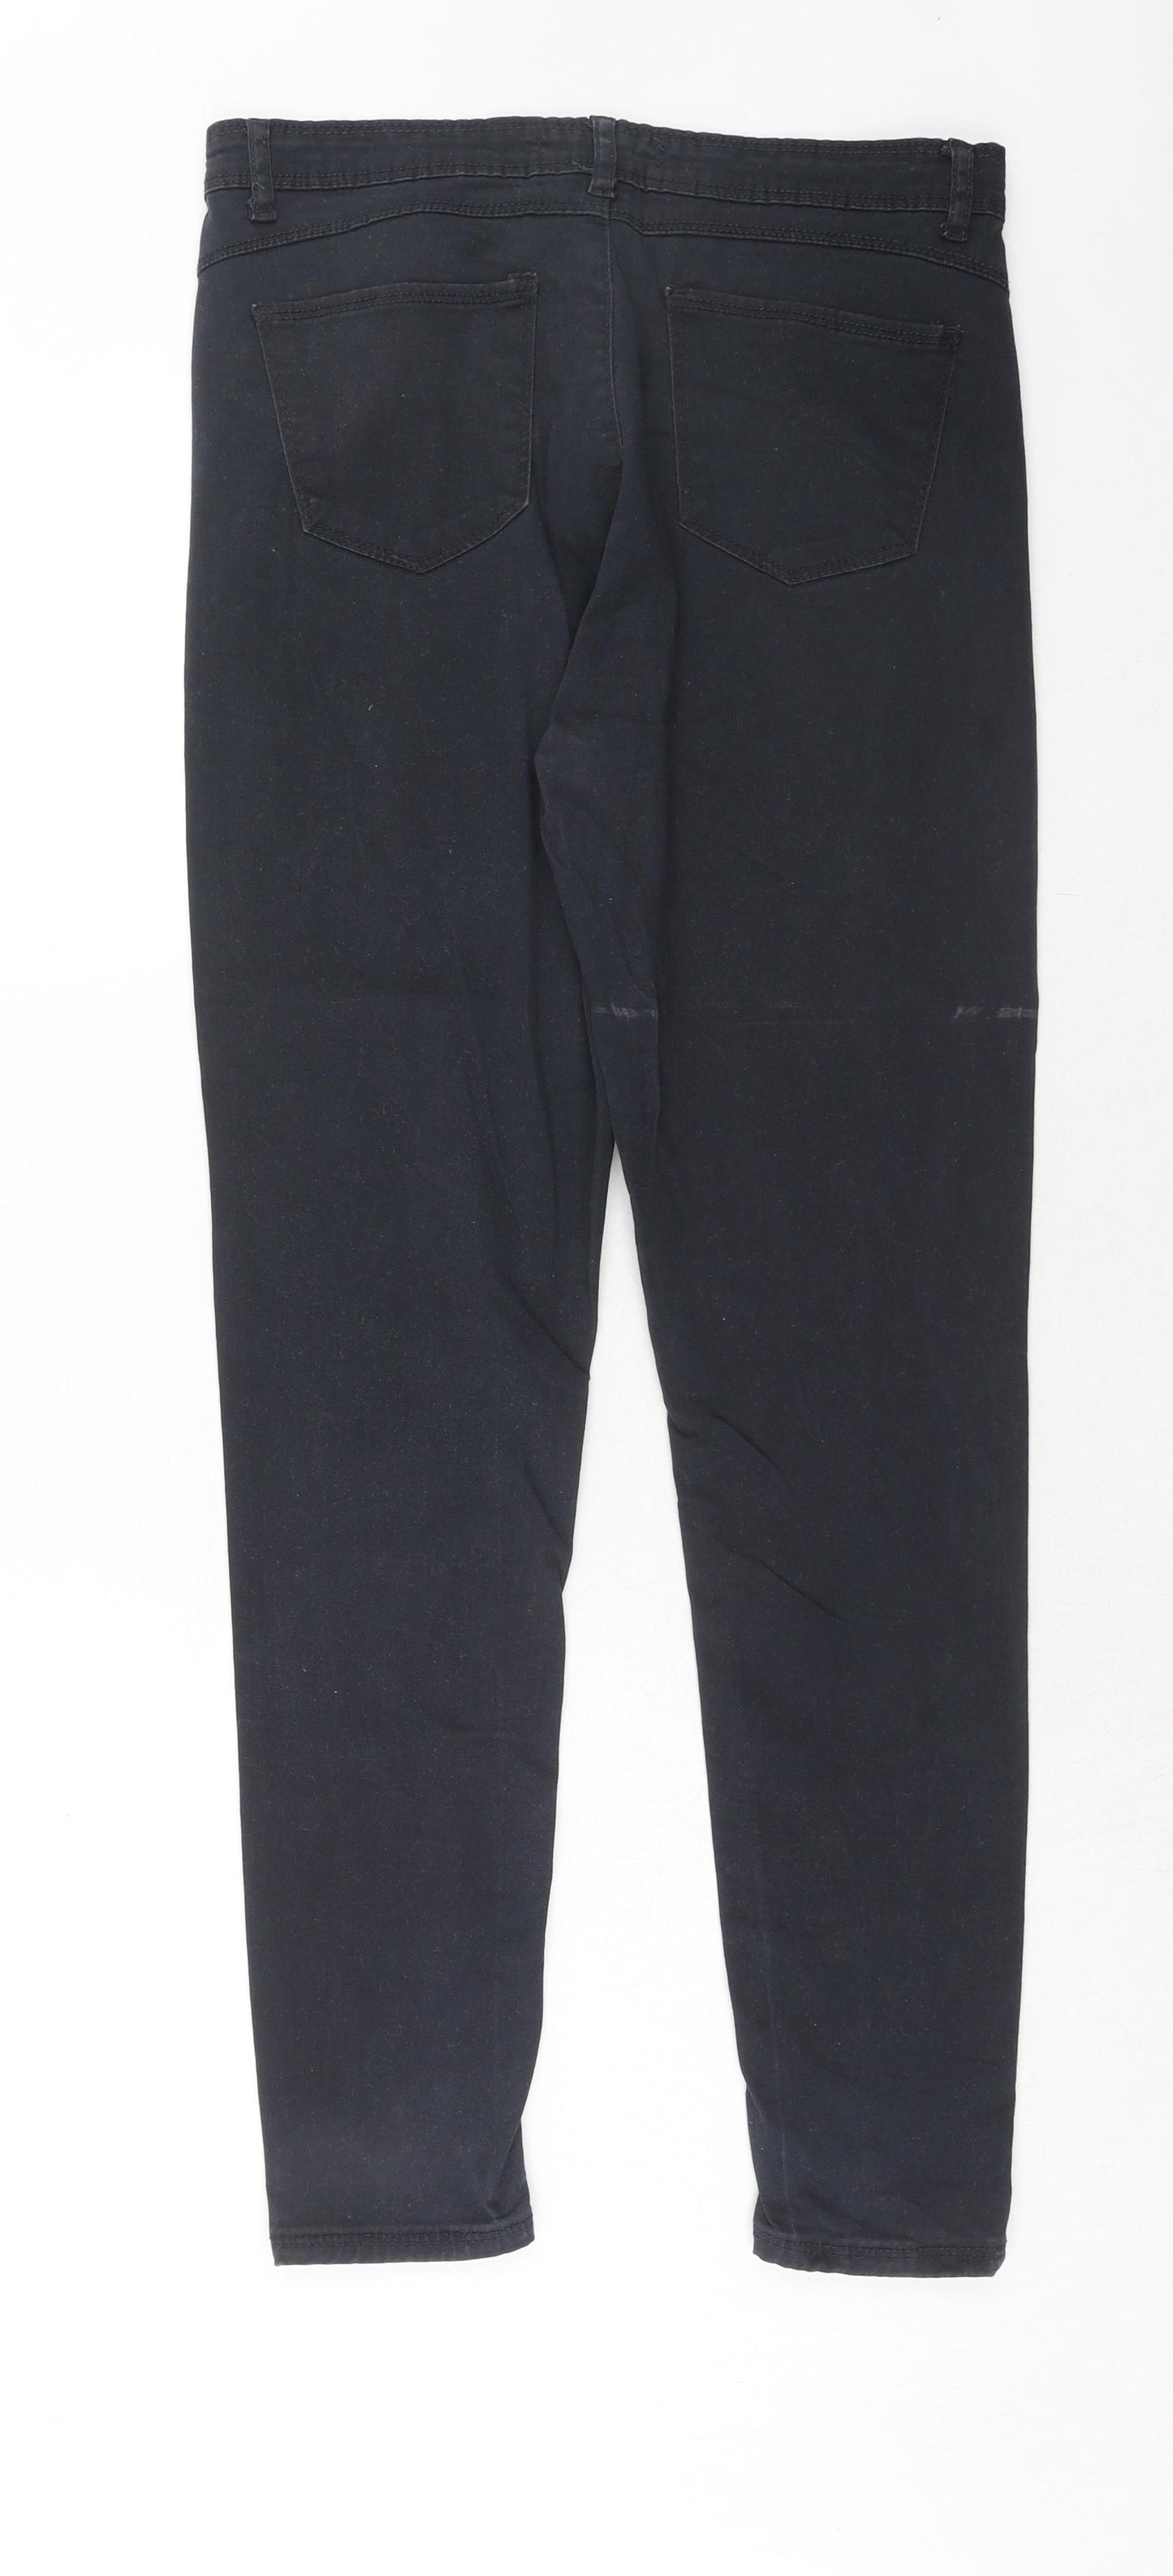 Kangol Womens Blue Cotton Skinny Jeans Size 12 Regular Zip